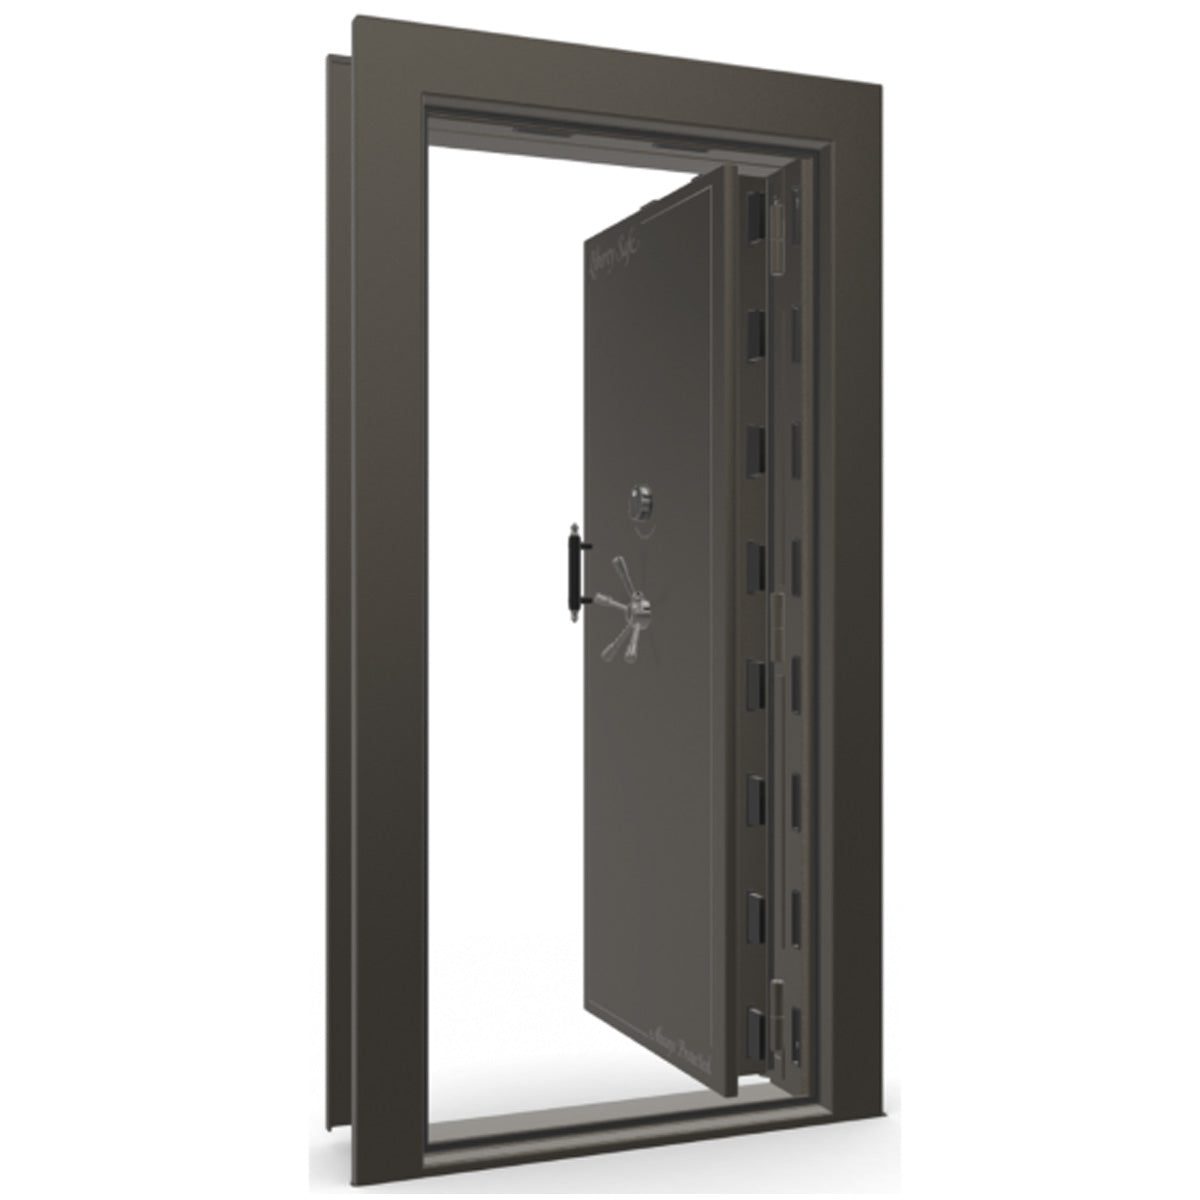 The Beast Vault Door in Gray Marble with Black Chrome Electronic Lock, Right Inswing, door open.